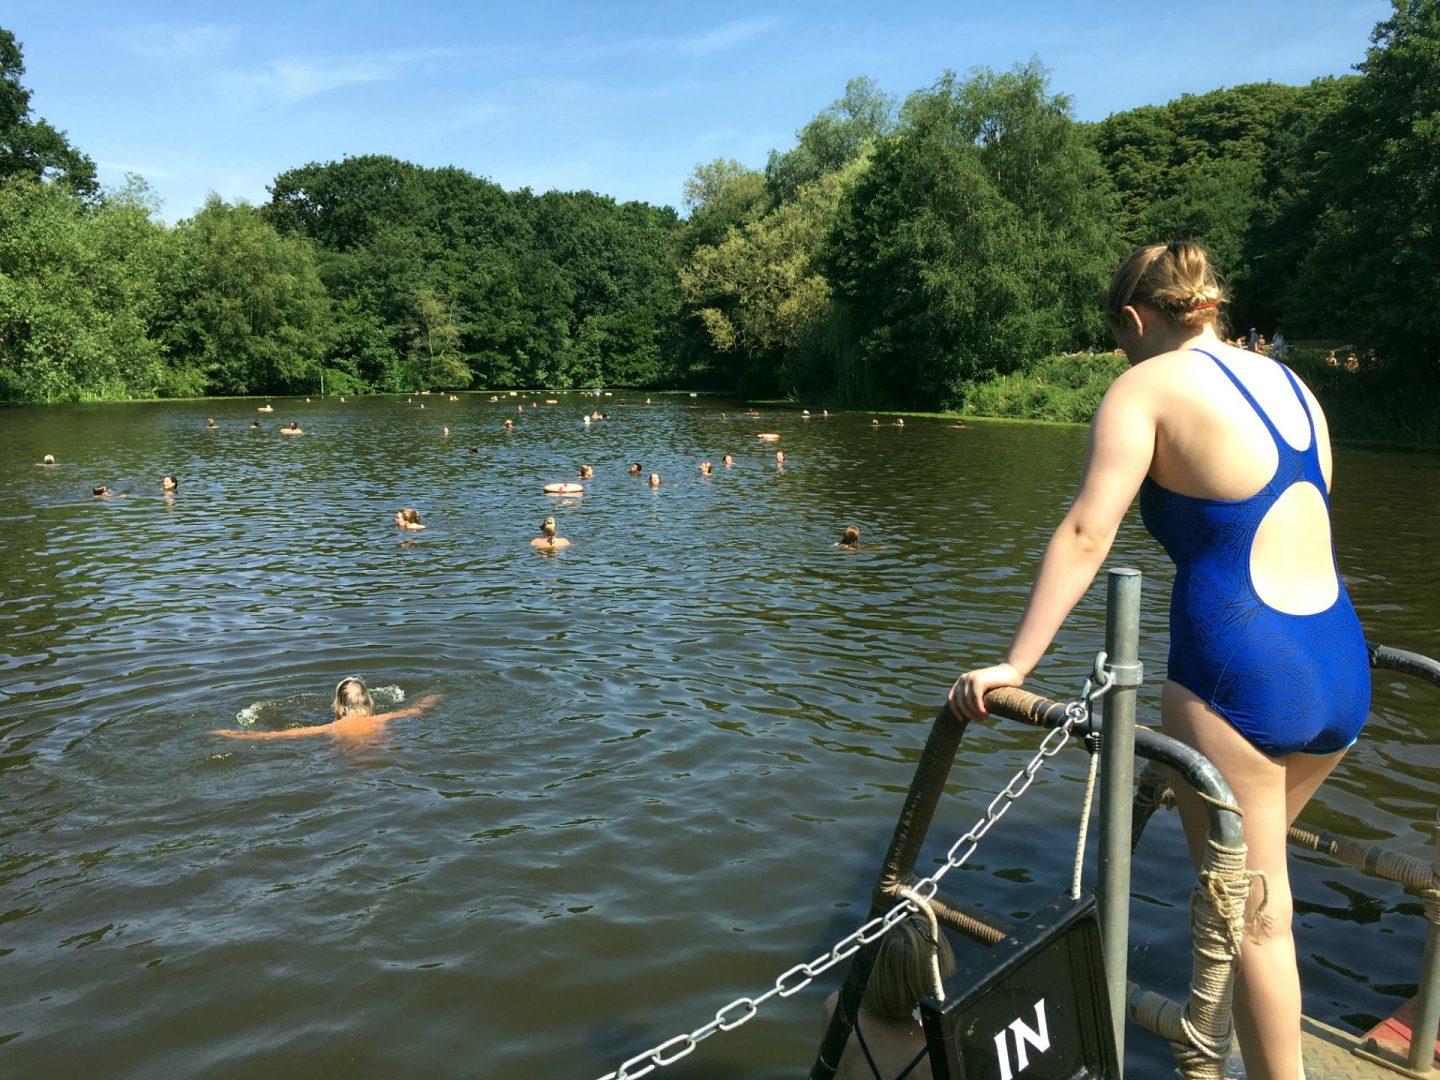 Wild swimming near London - Hampstead Heath The Girl Outdoors